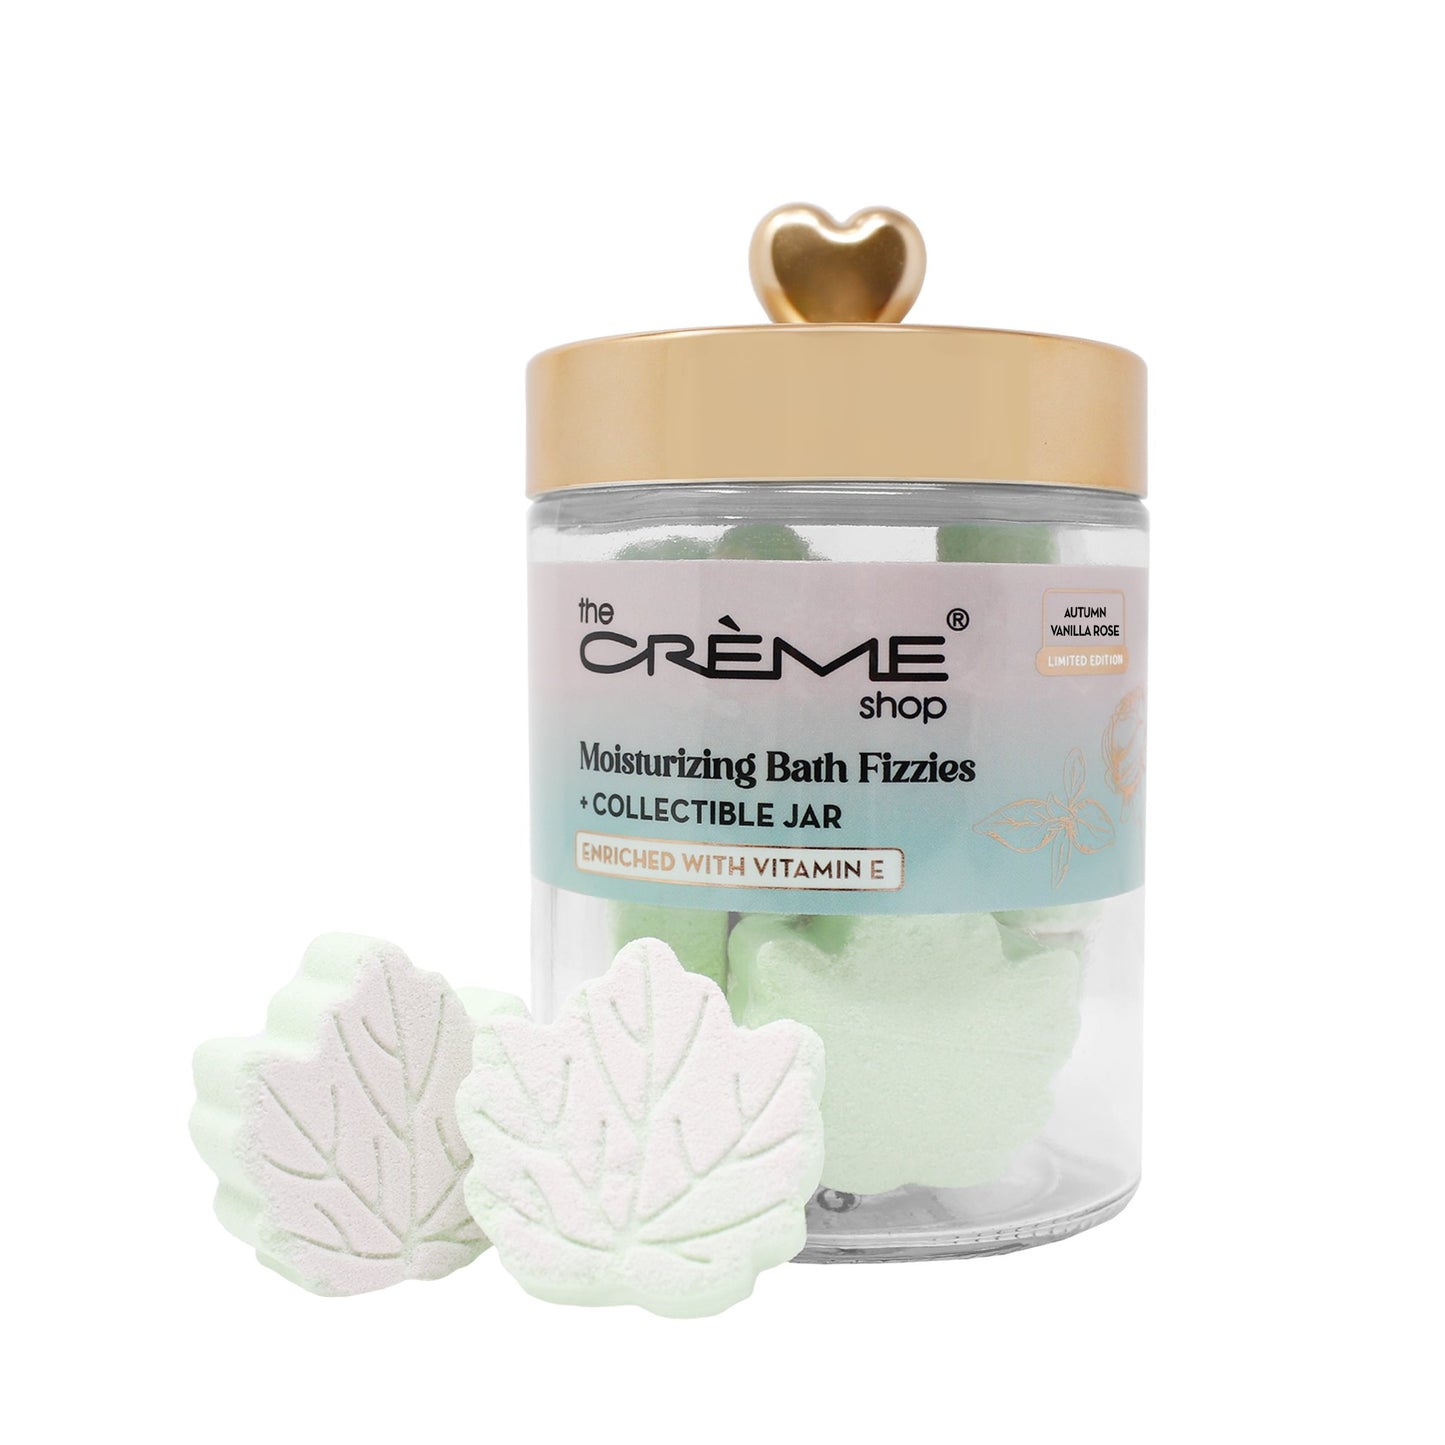 Moisturizing Bath Fizzies + Collectible Jar - Autumn Vanilla Rose Bath Bombs The Crème Shop 